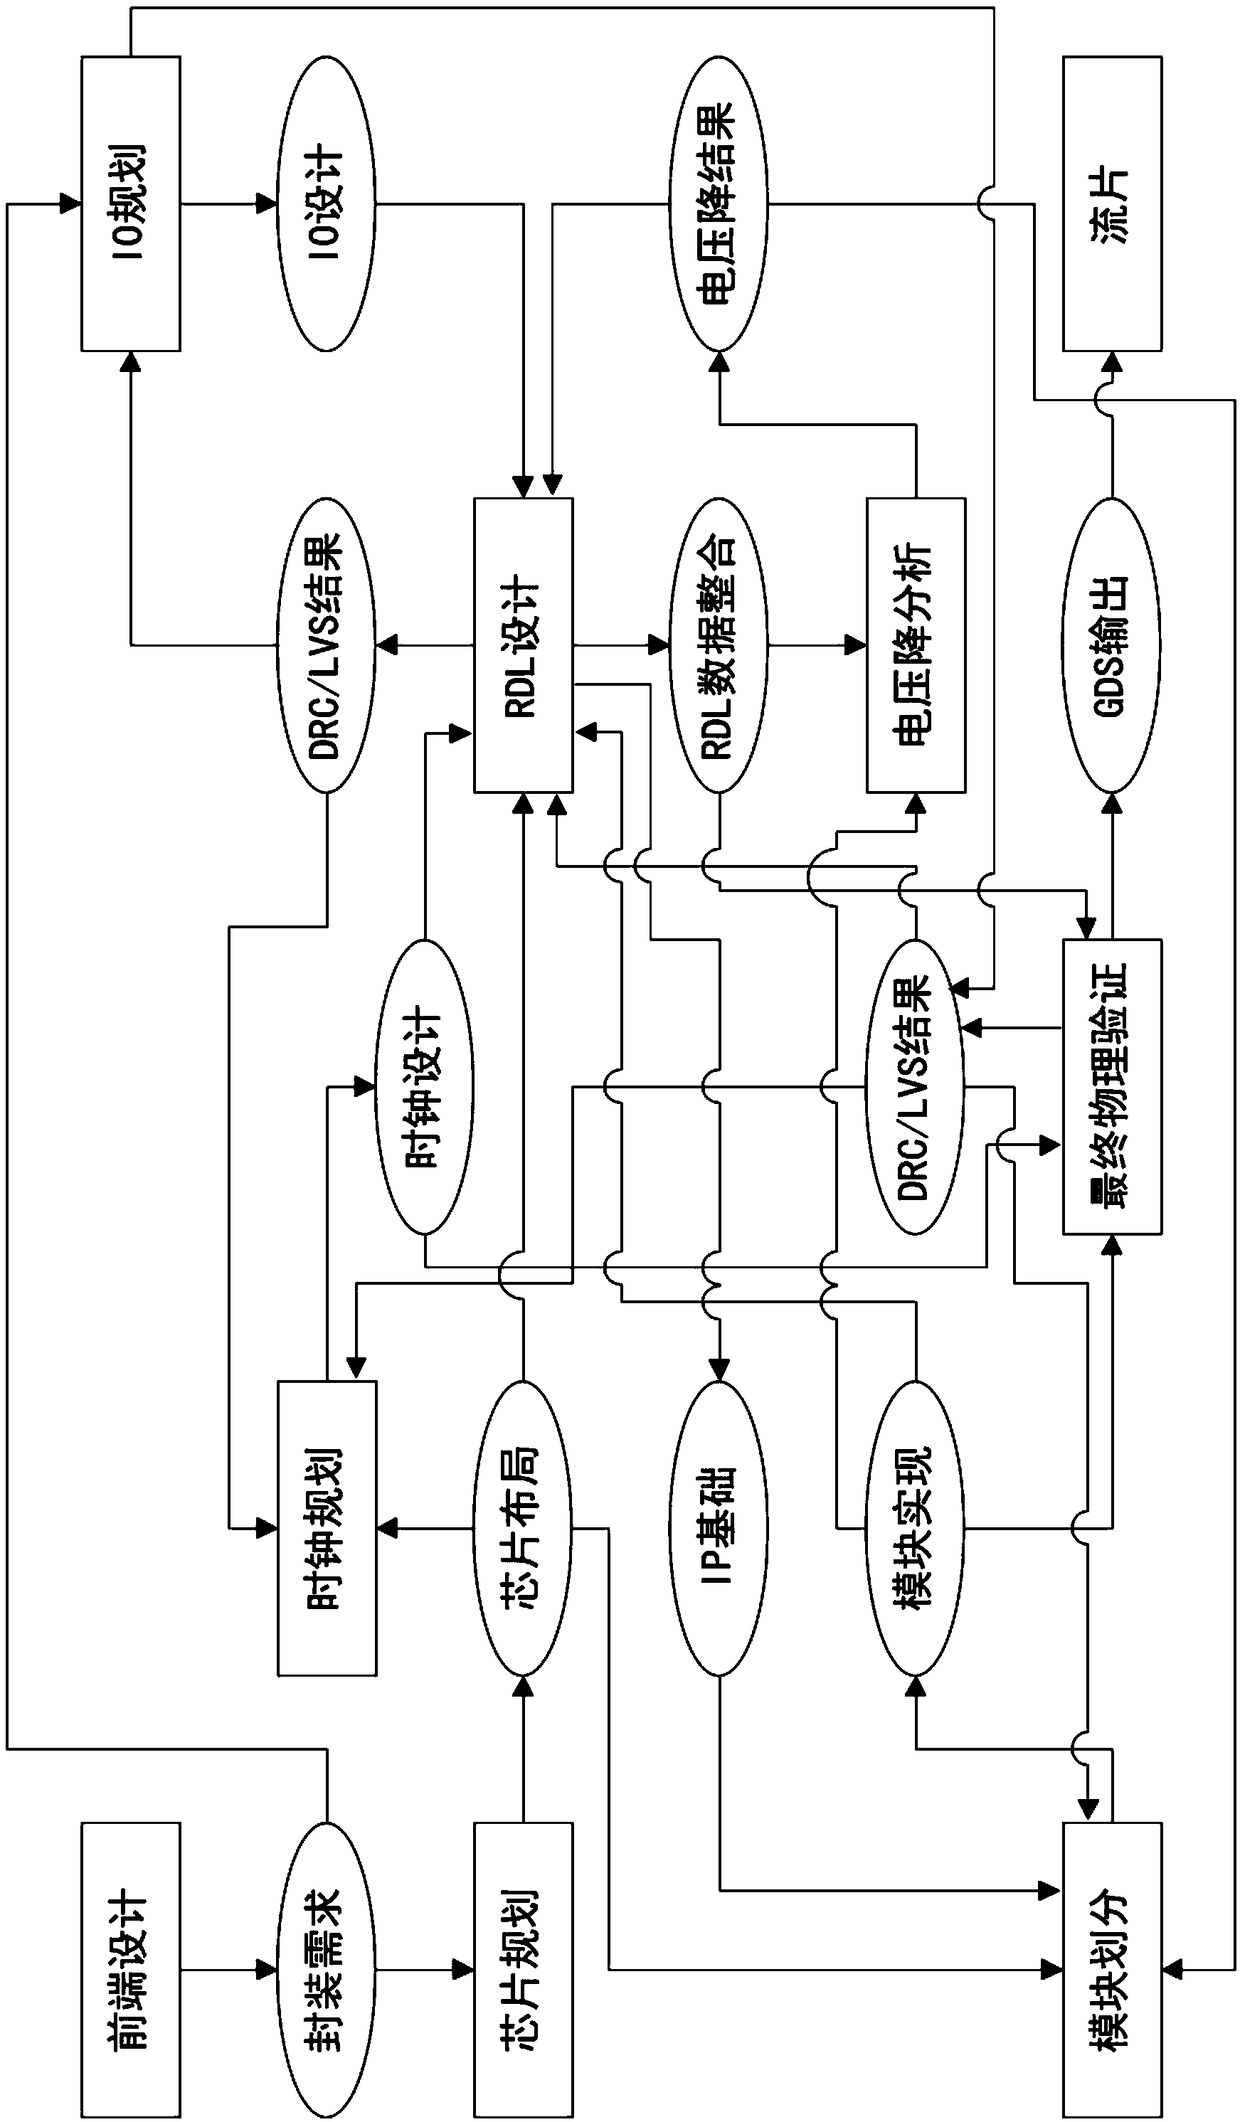 Efficient RDL design method for back-end semi-custom design of integrated circuits